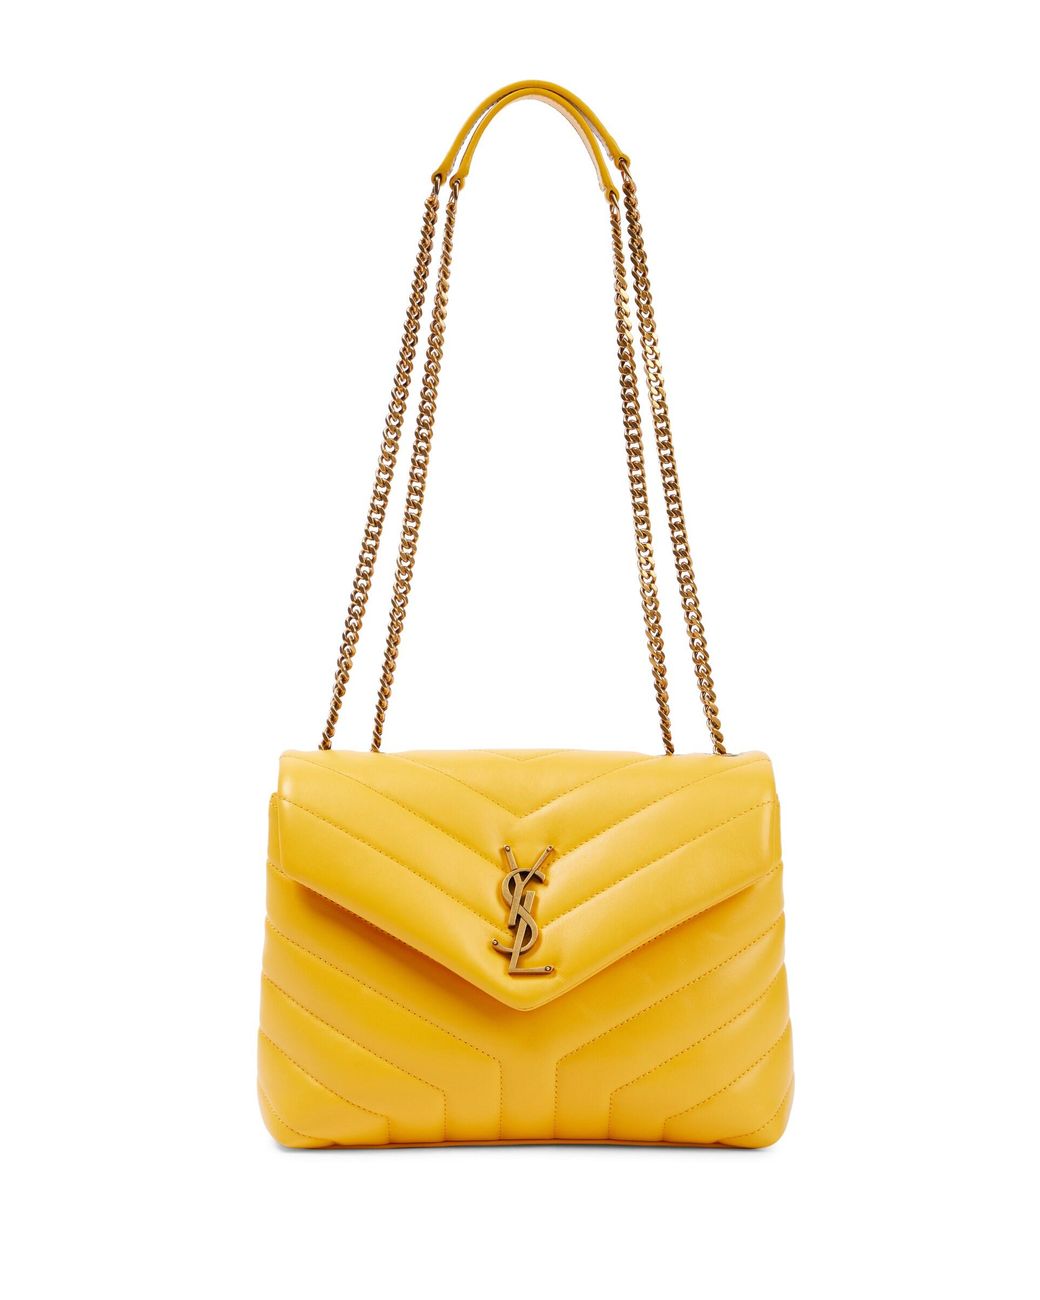 Lou leather handbag Saint Laurent Yellow in Leather - 36076376